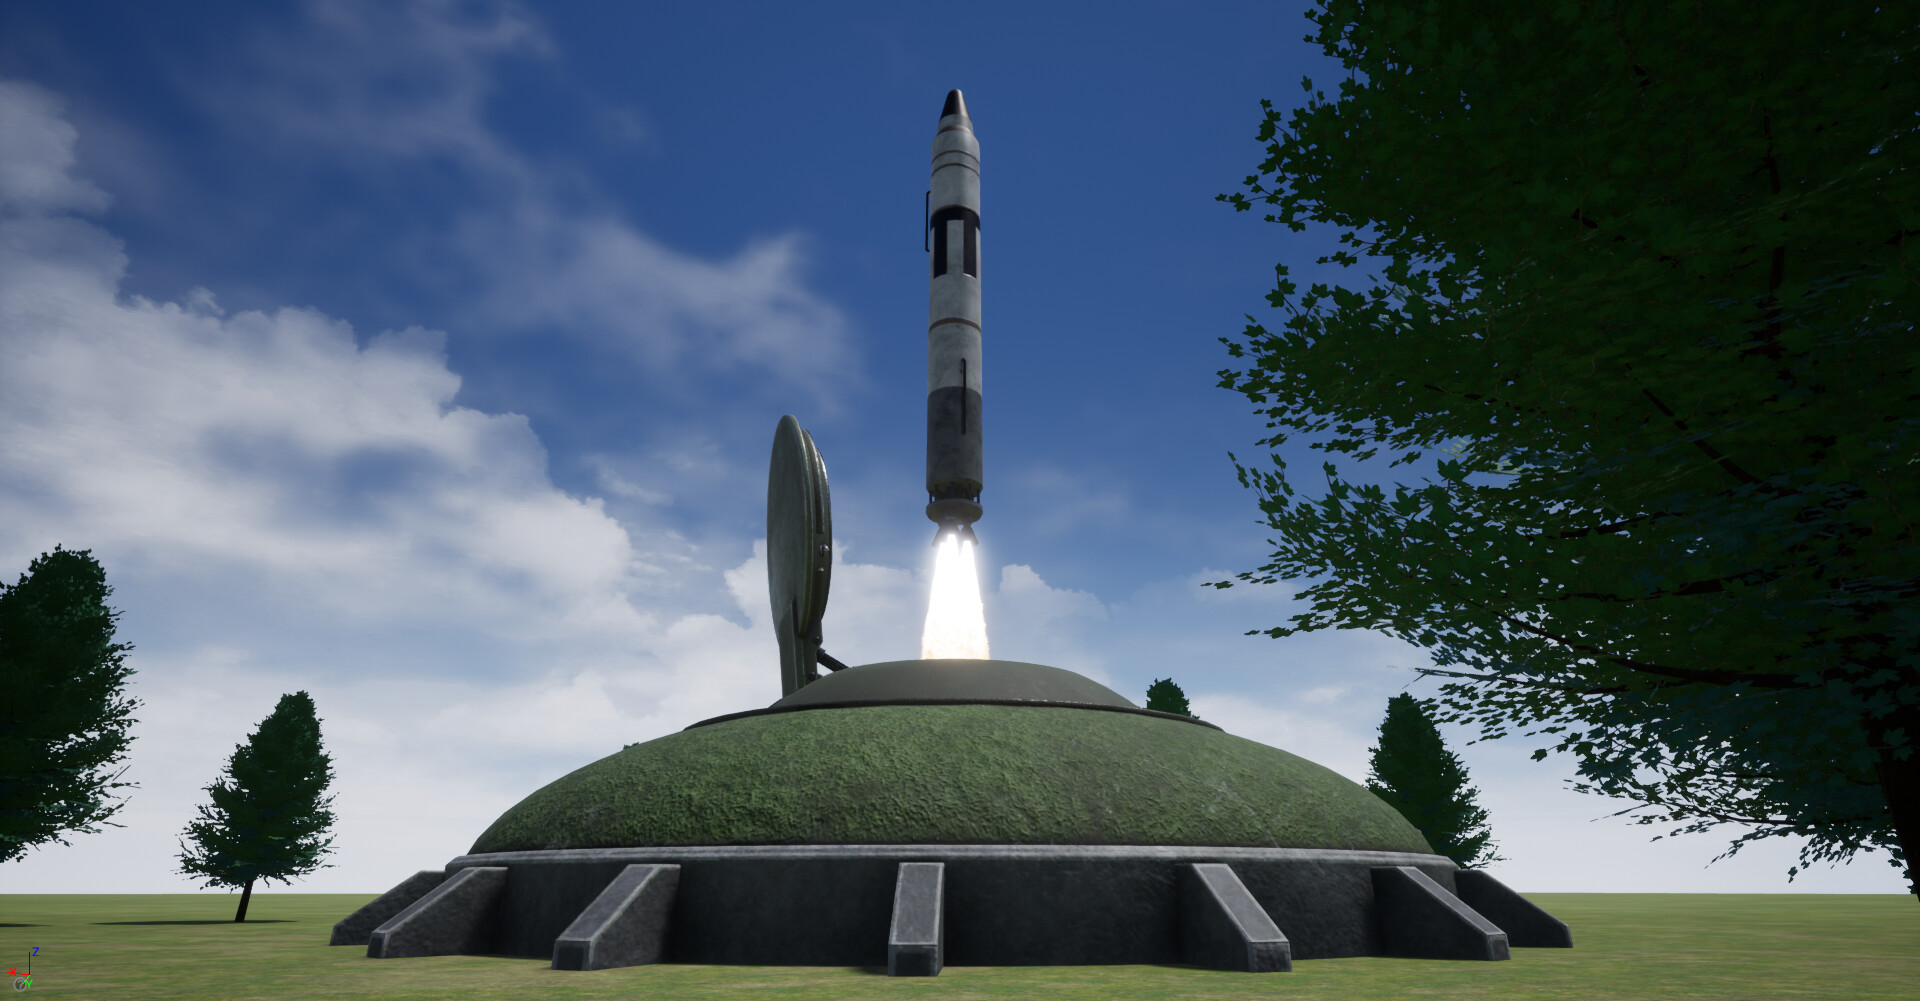 Nuclear Rocket Launcher